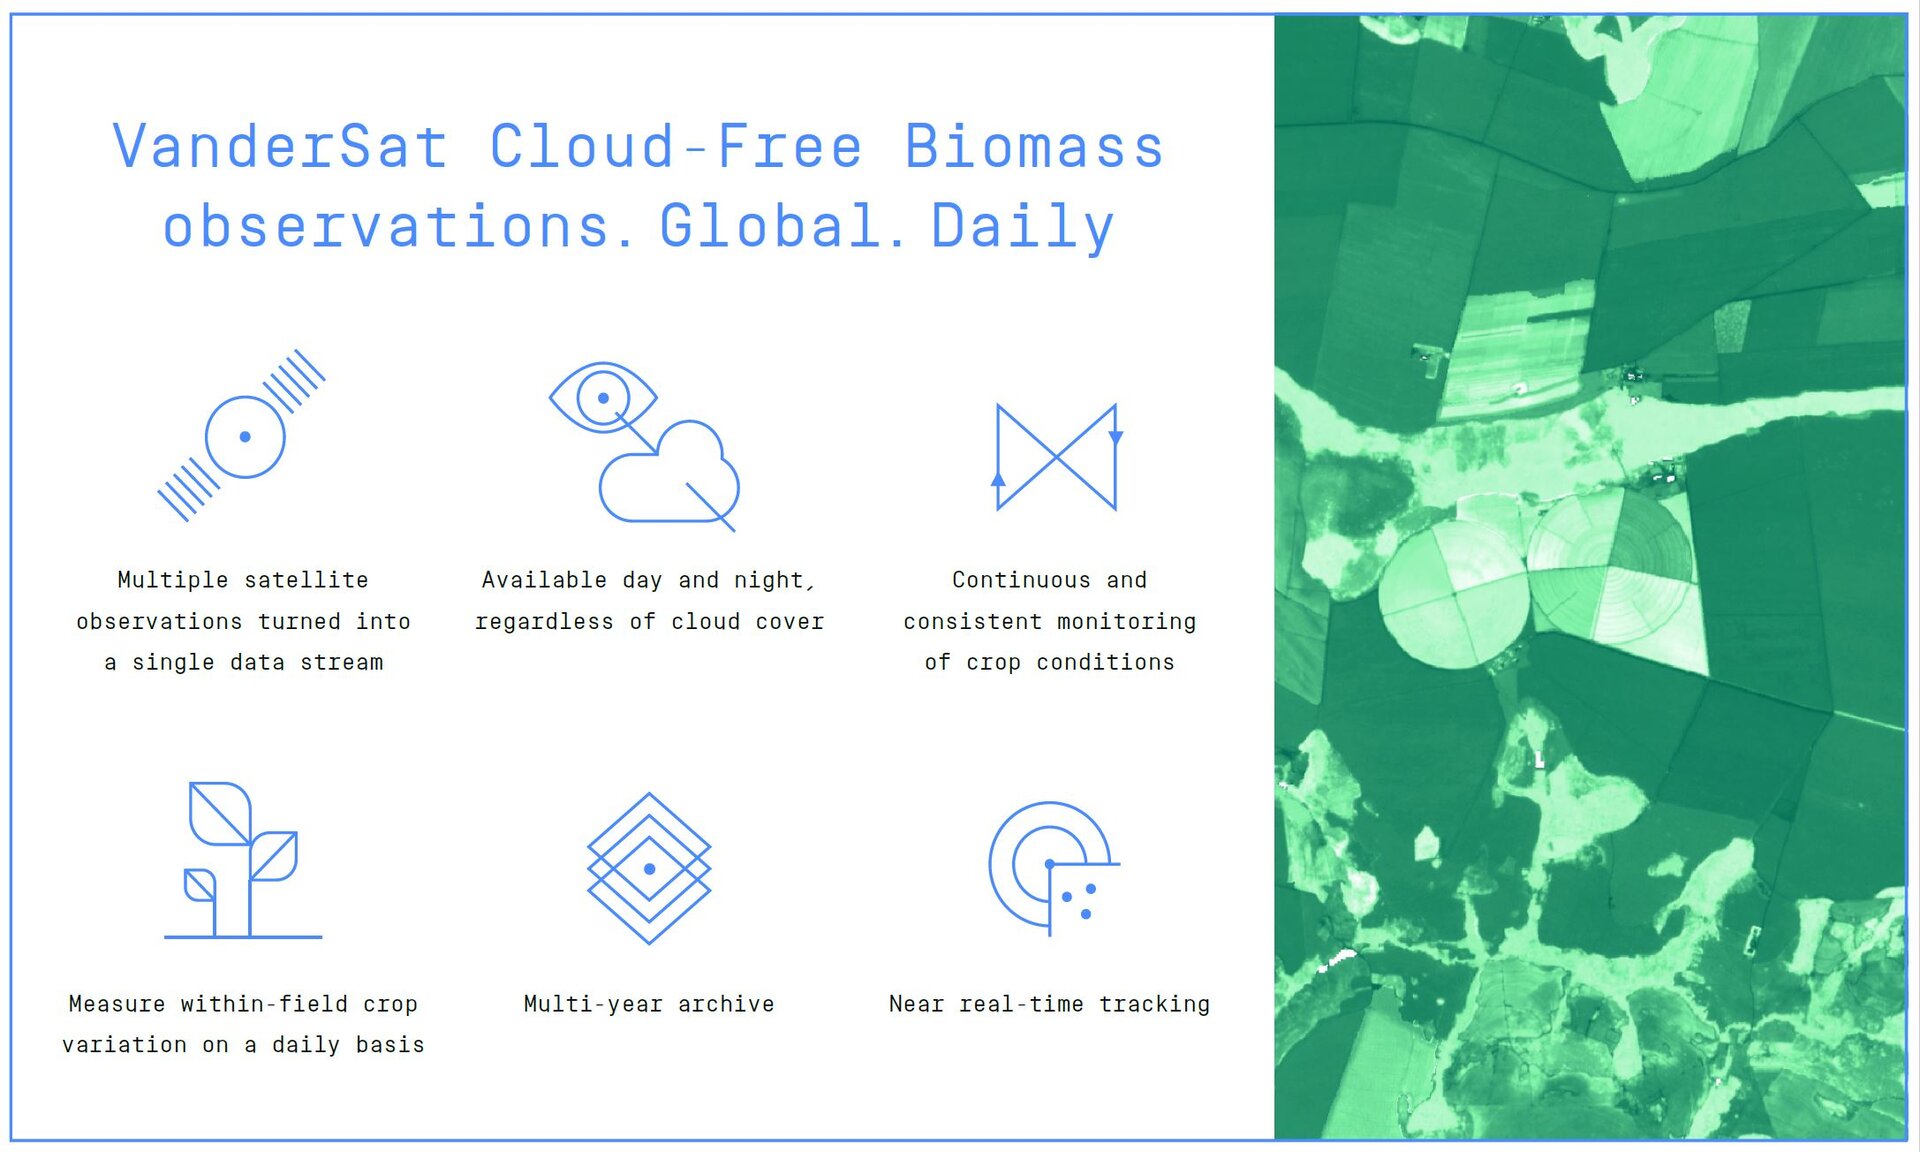 Benefits of Cloud-free Biomass